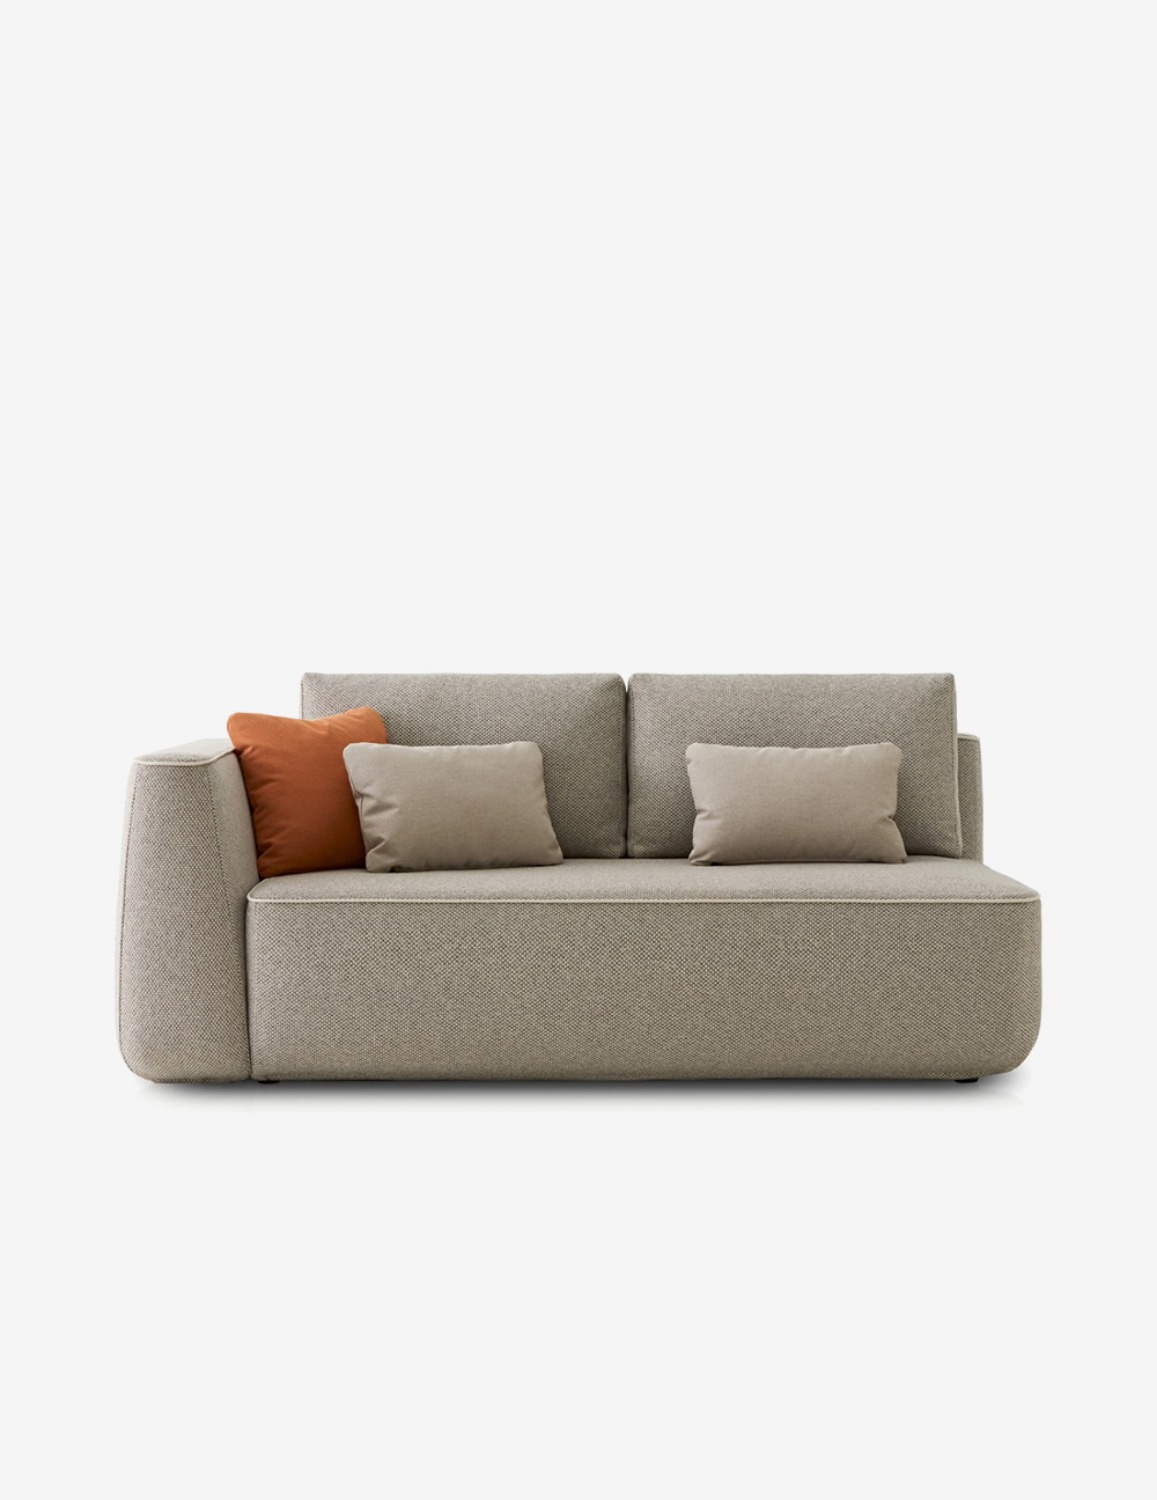 Plump Chaise Lounge Modular Sofa 2